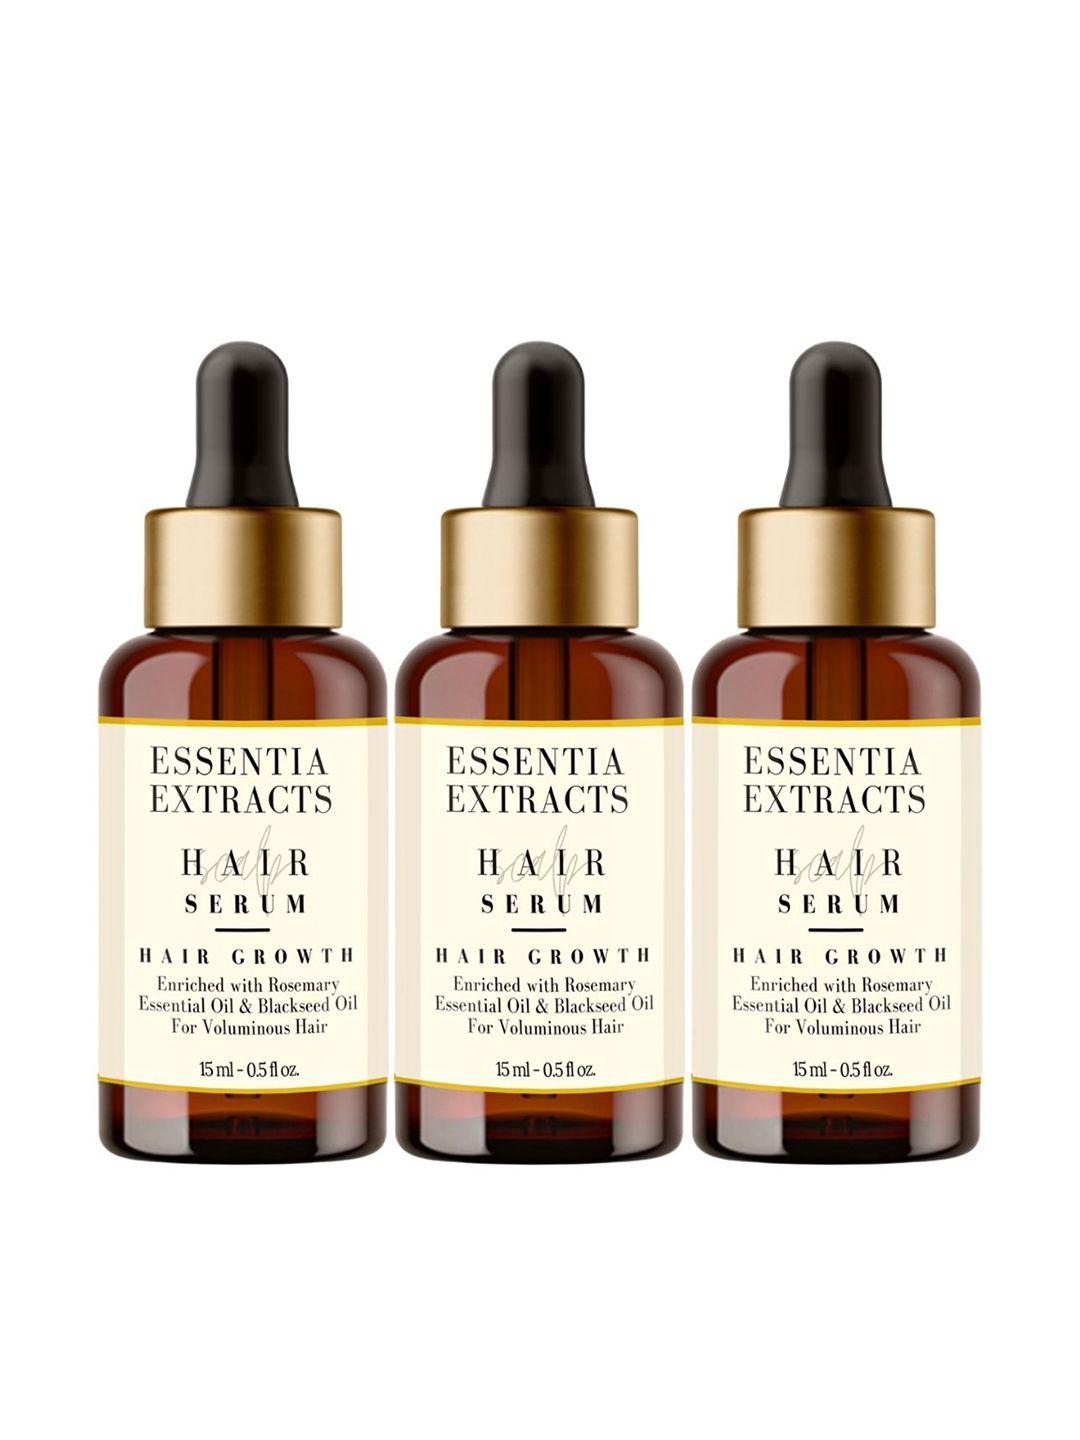 essentia extracts set of 3 hair growth serum for voluminous hair - 15 ml each